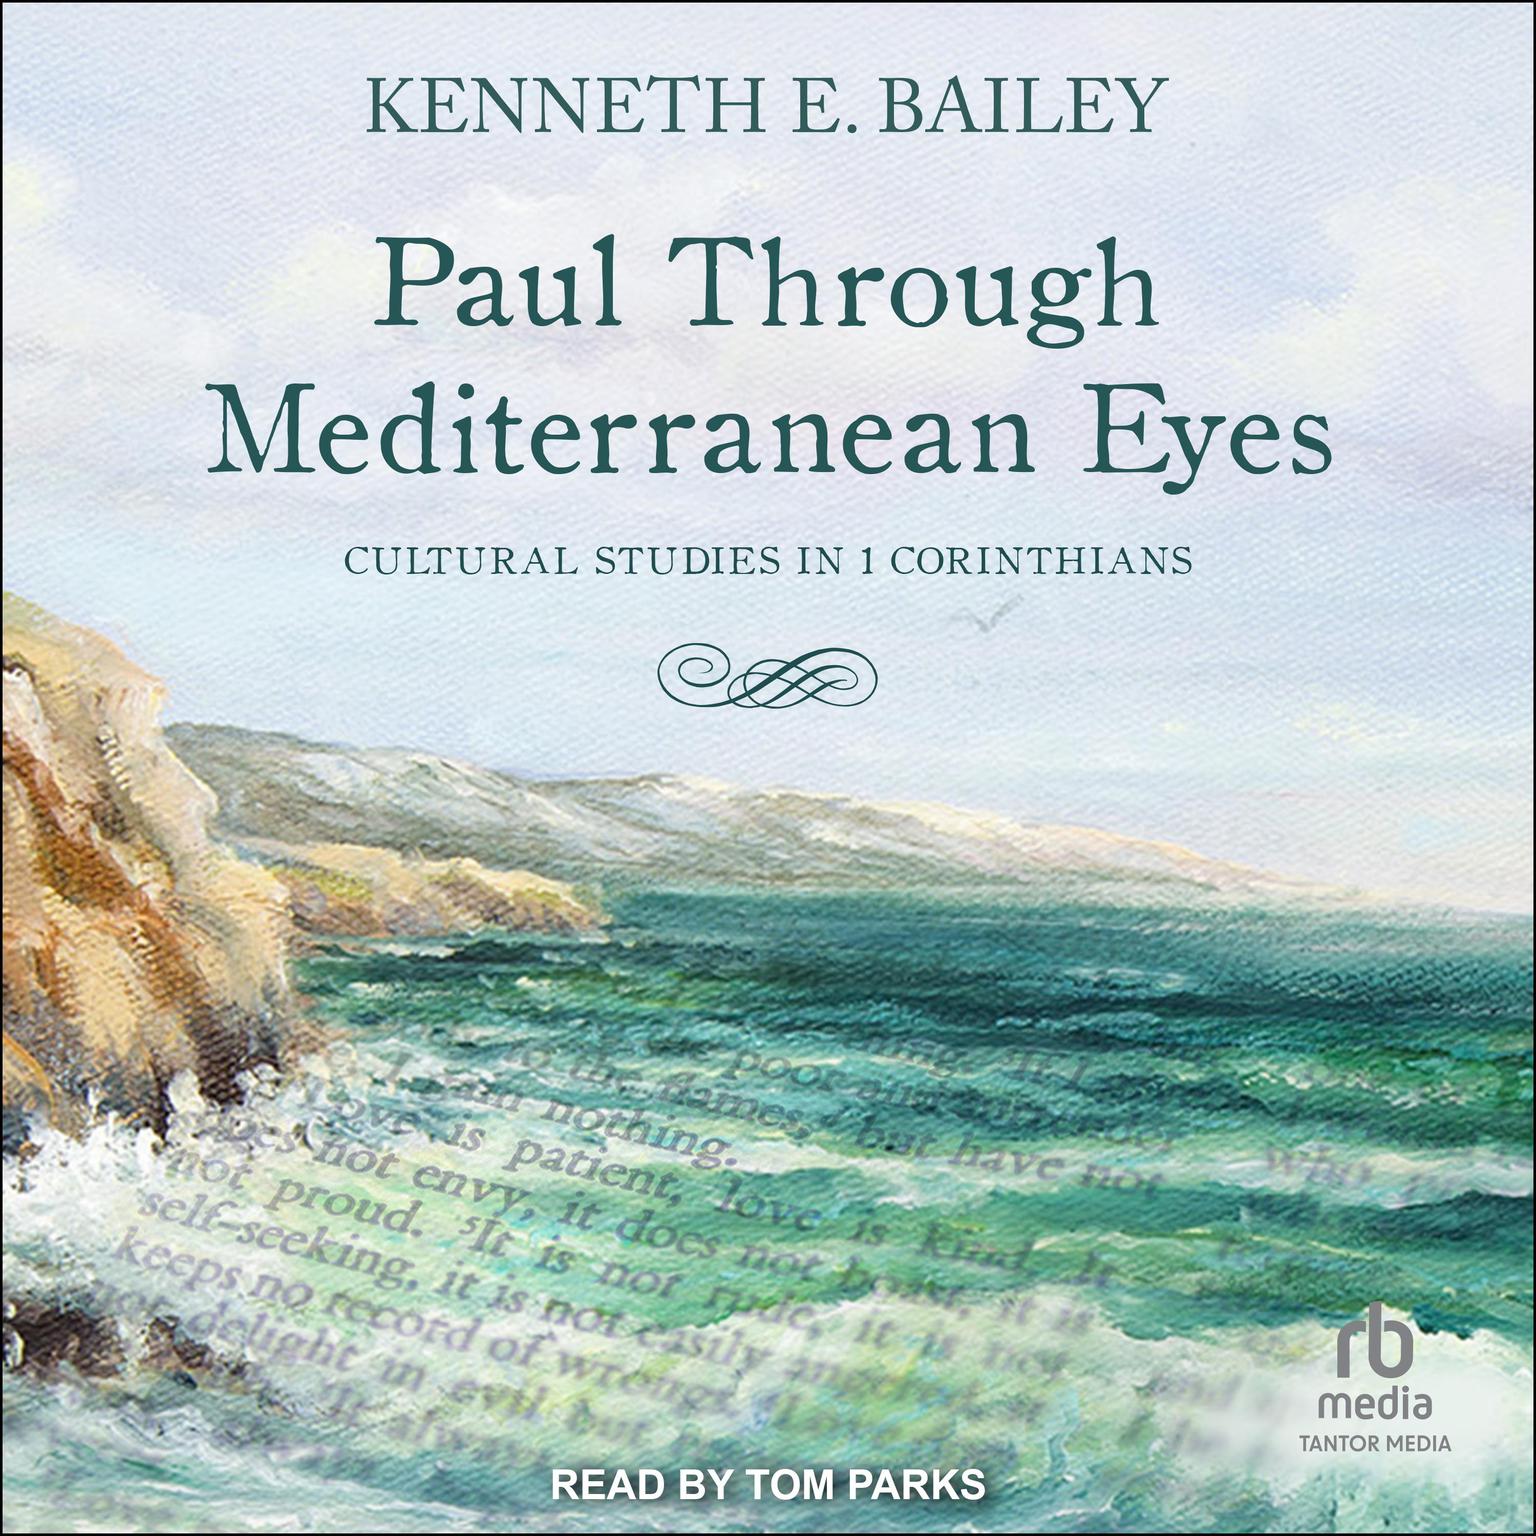 Paul Through Mediterranean Eyes: Cultural Studies in 1 Corinthians Audiobook, by Kenneth E. Bailey